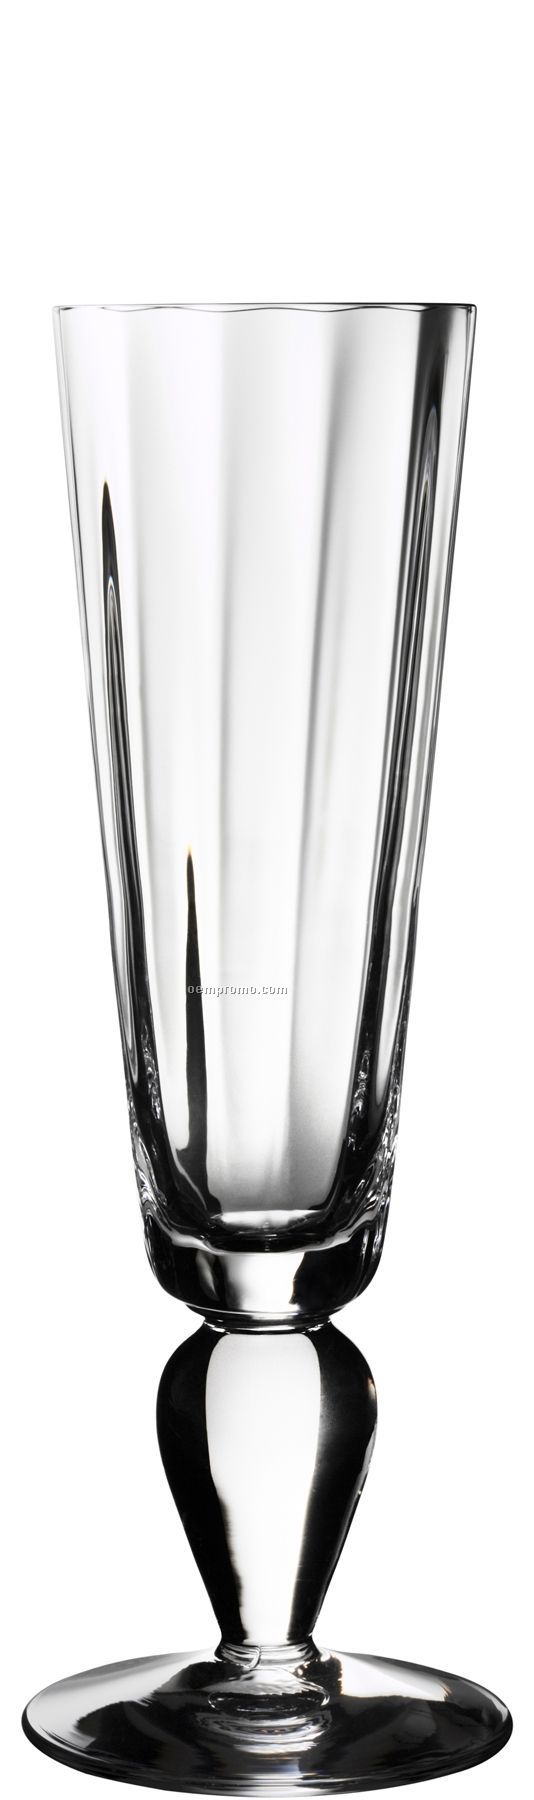 Linne Glass Champagne Flute Stemware W/ Bulb Pedestal Stem By Goran Warff